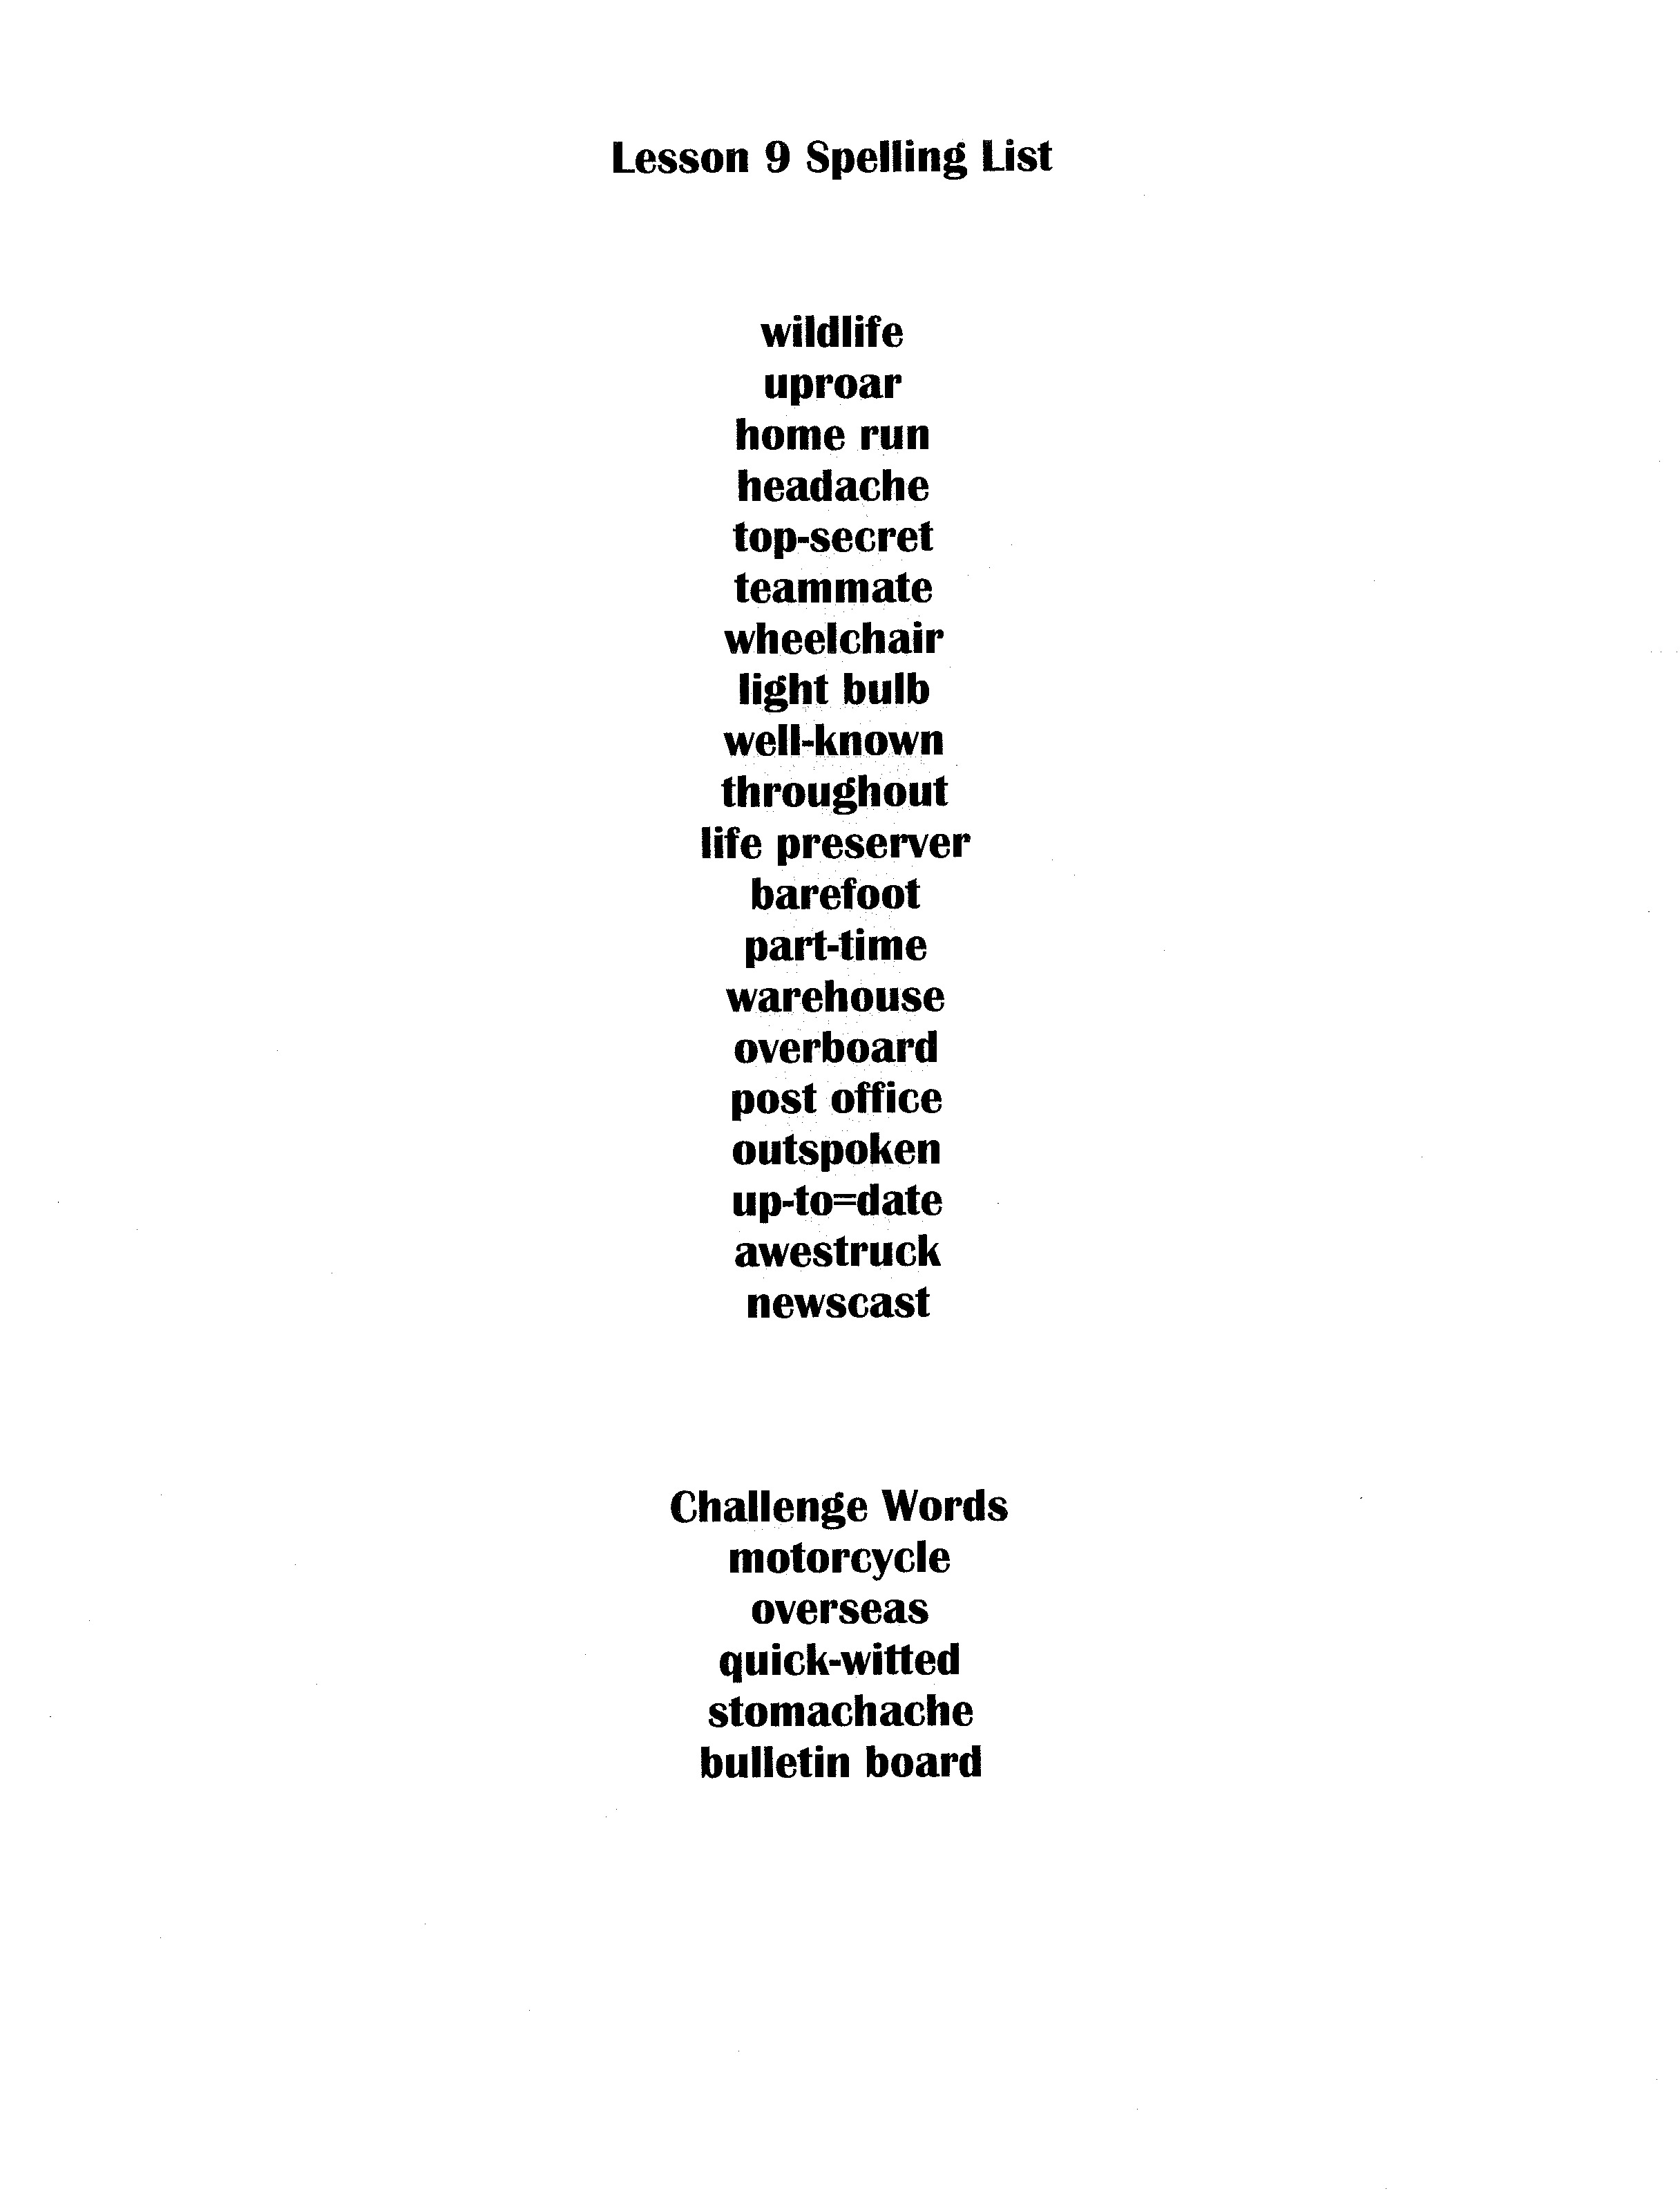 5th Grade Spelling List Image